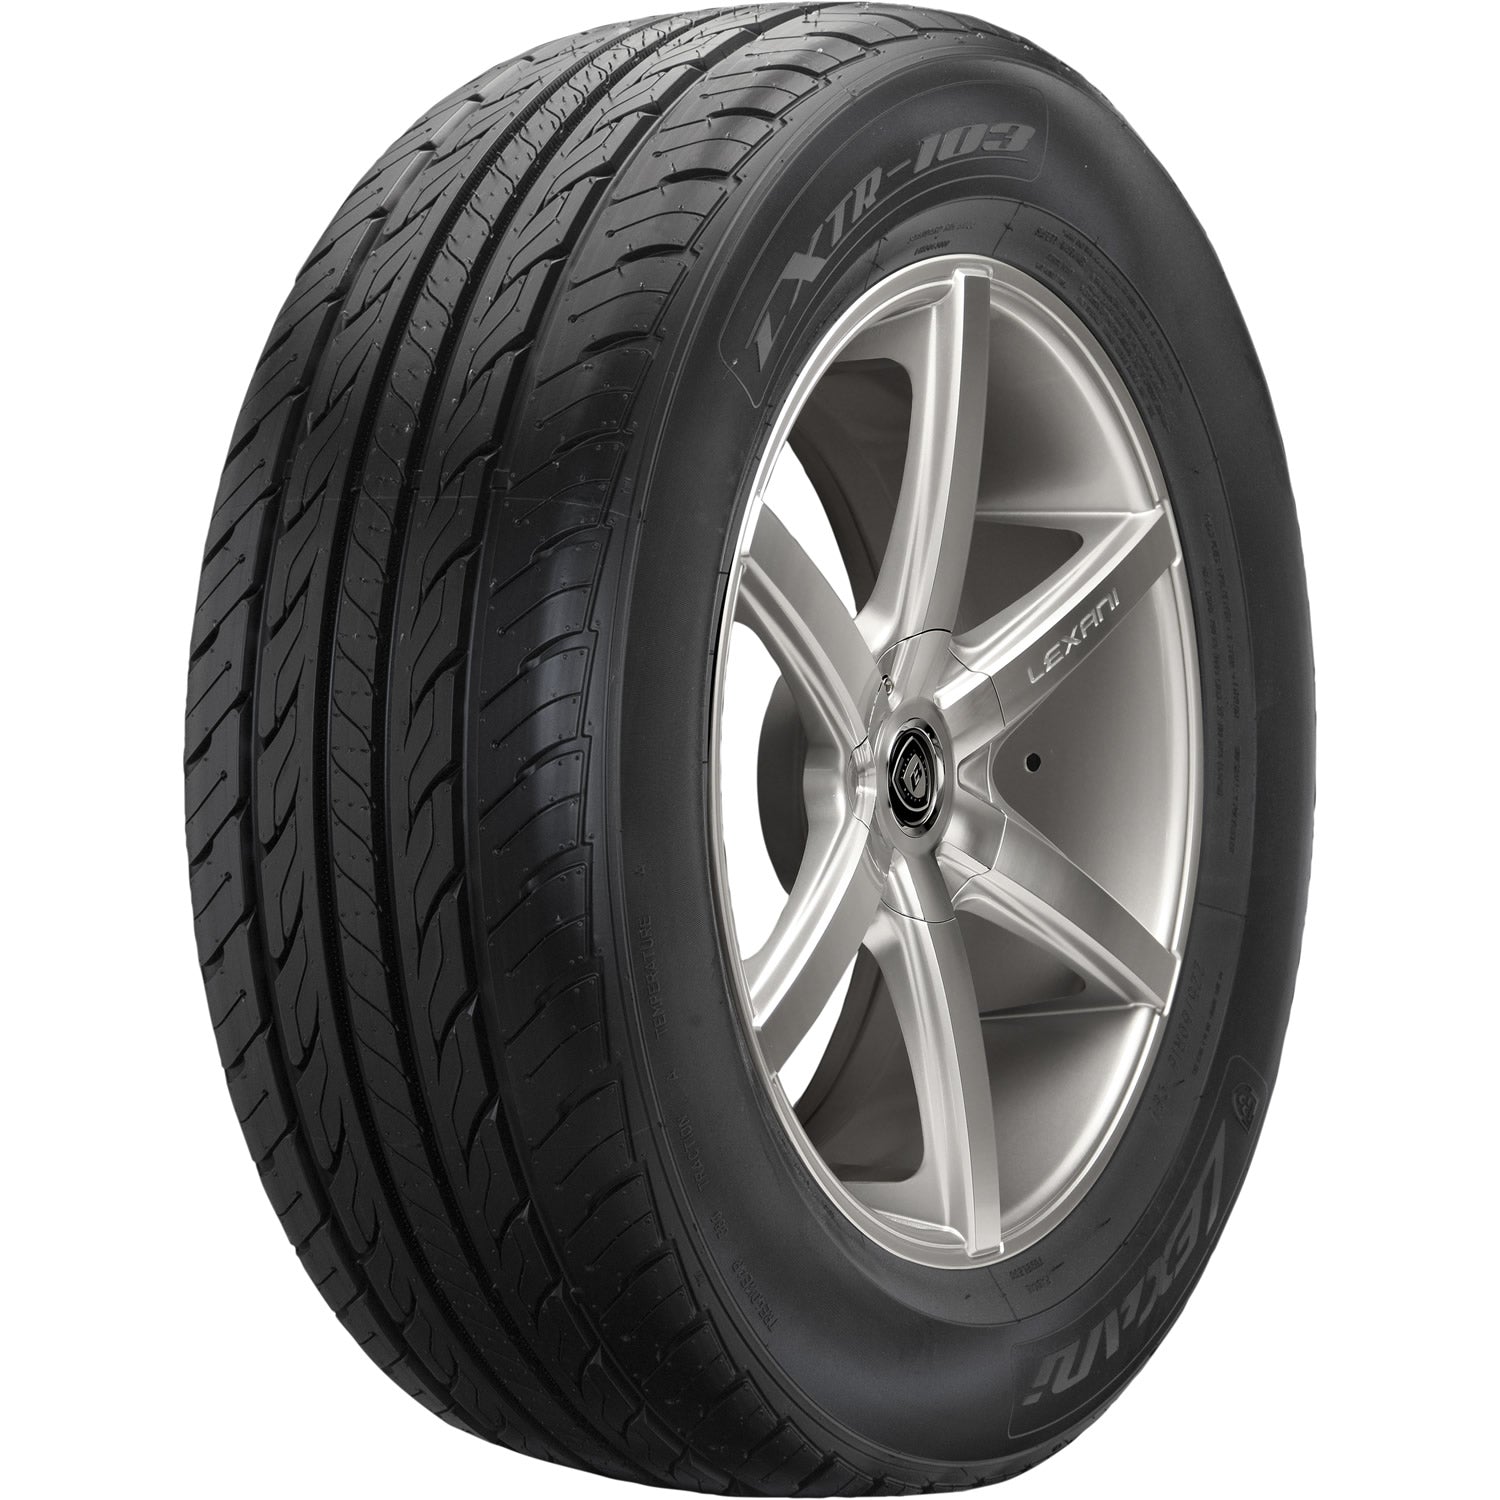 LEXANI LXTR-103 215/65R15 (26X8.7R 15) Tires